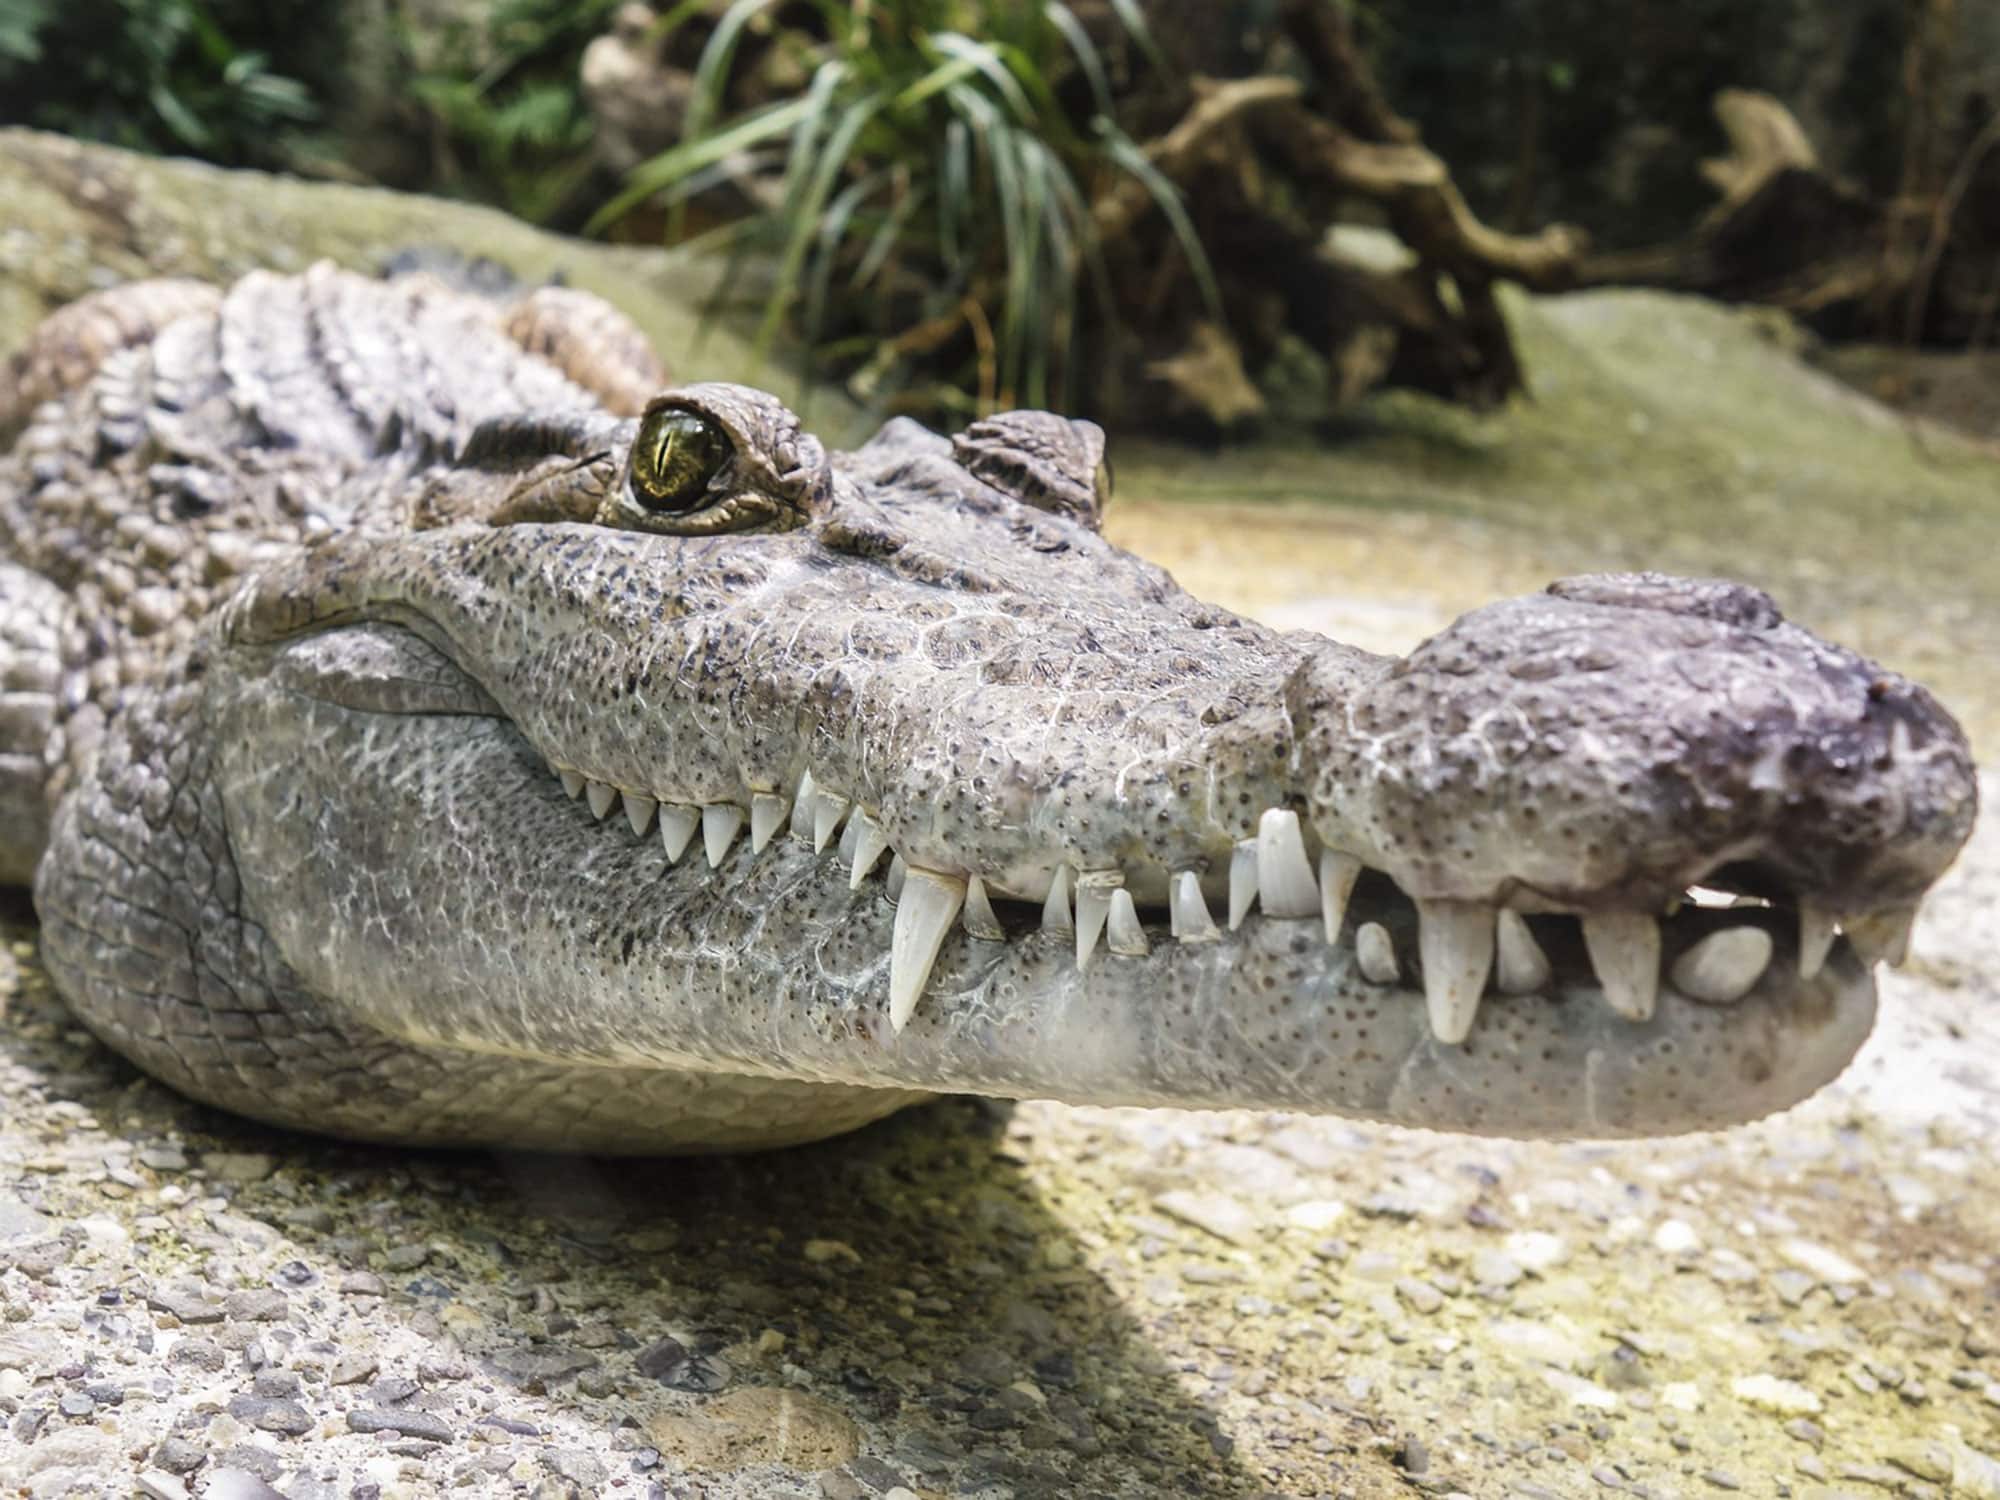 Closeup of a crocodile's head